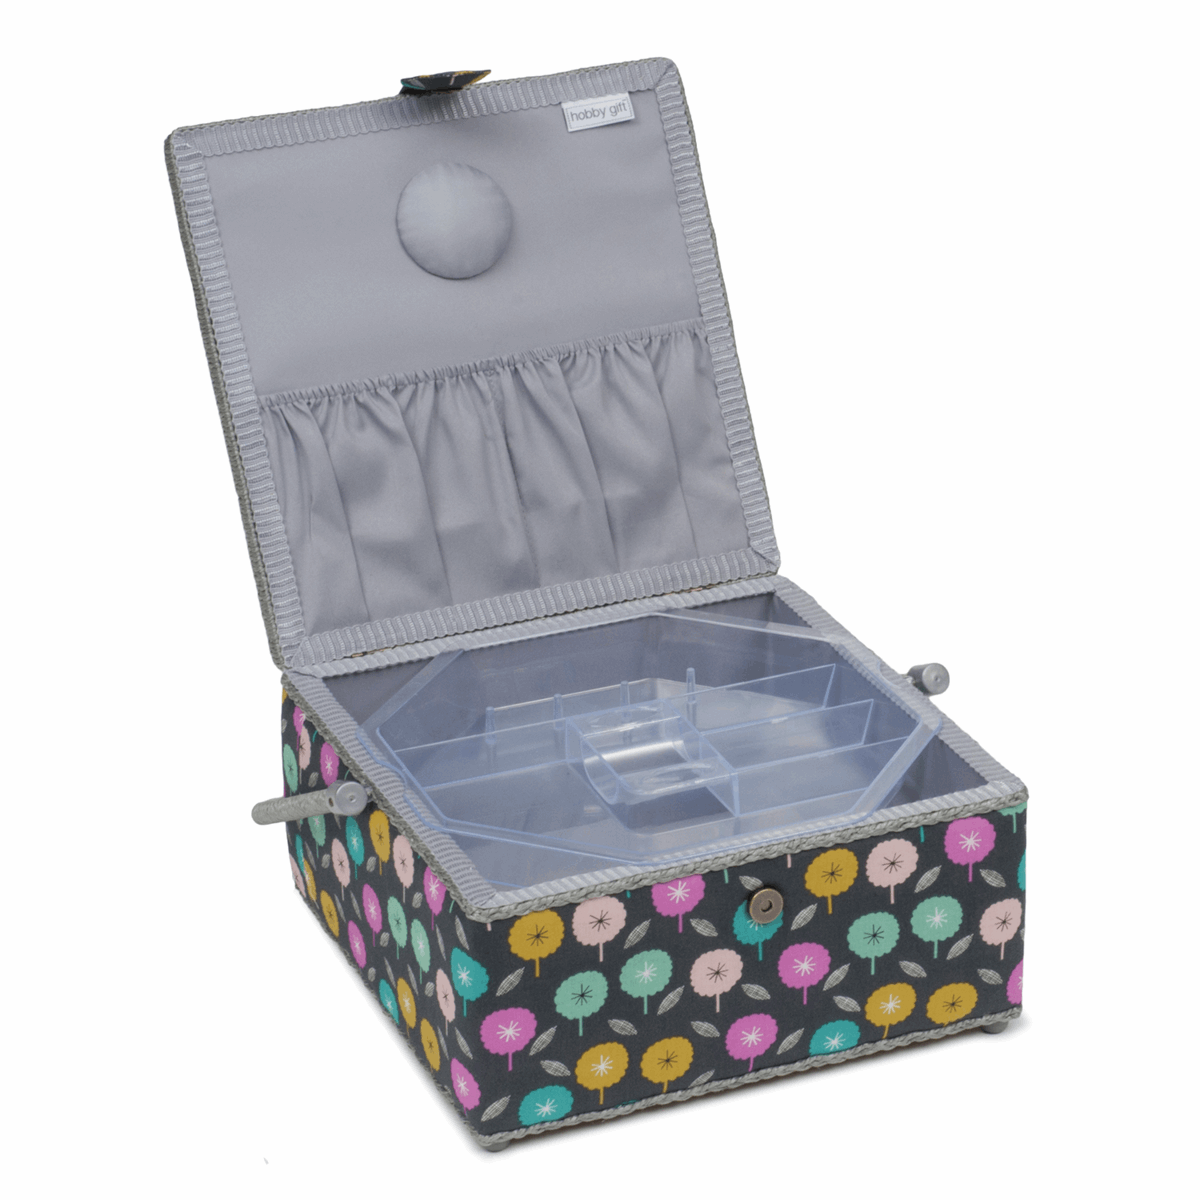 Jumbo Sewing Box Square - Confetti / Hobby Gift